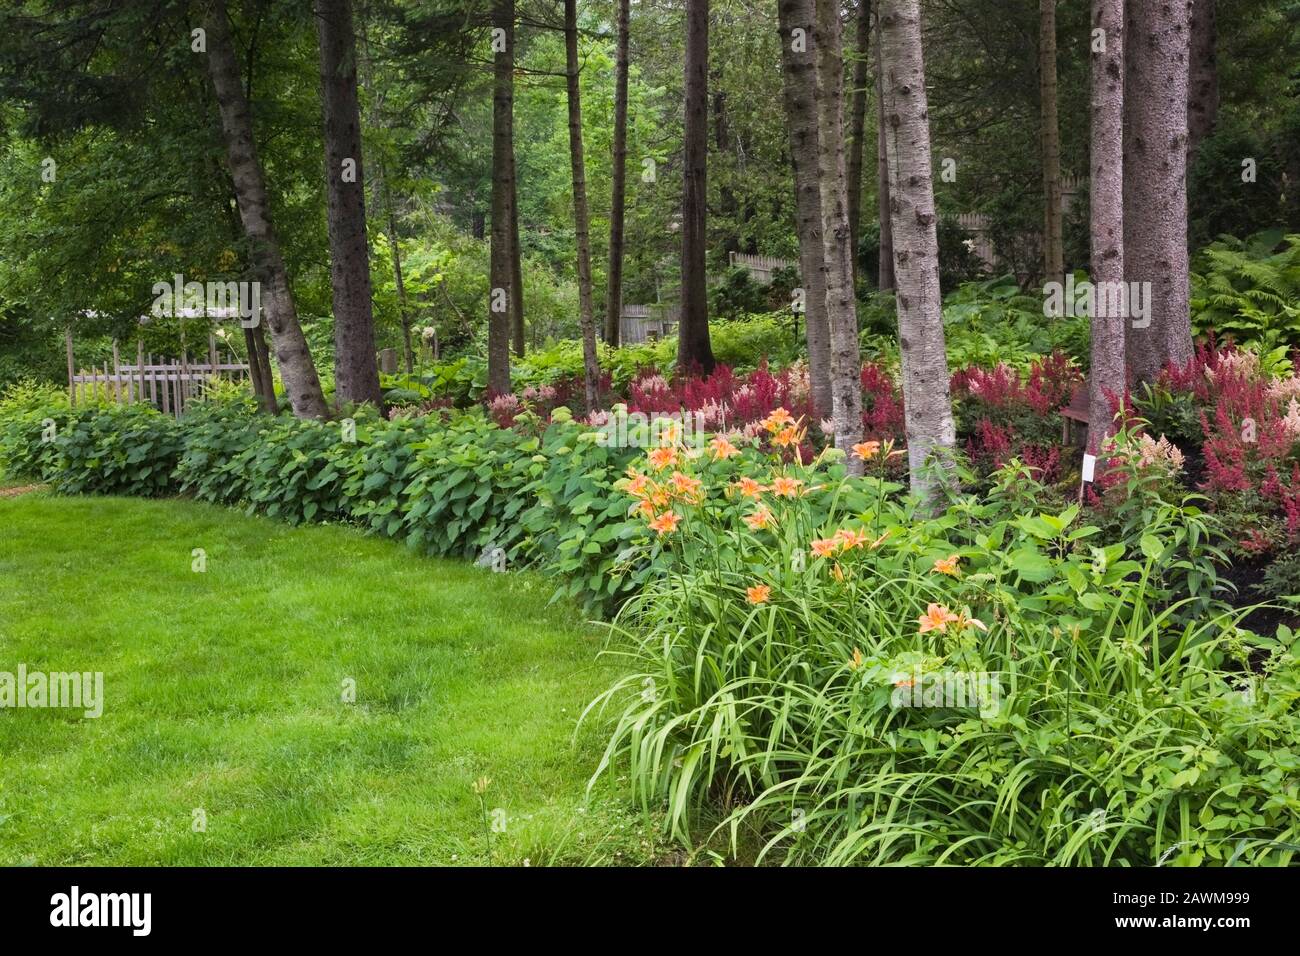 Border planted with orange Hemerocallis, burgundy red Astilbe X arendsii 'Burgunderrot' and Hydrangea arborescens ‘Annabelle’ shrubs in front yard Stock Photo